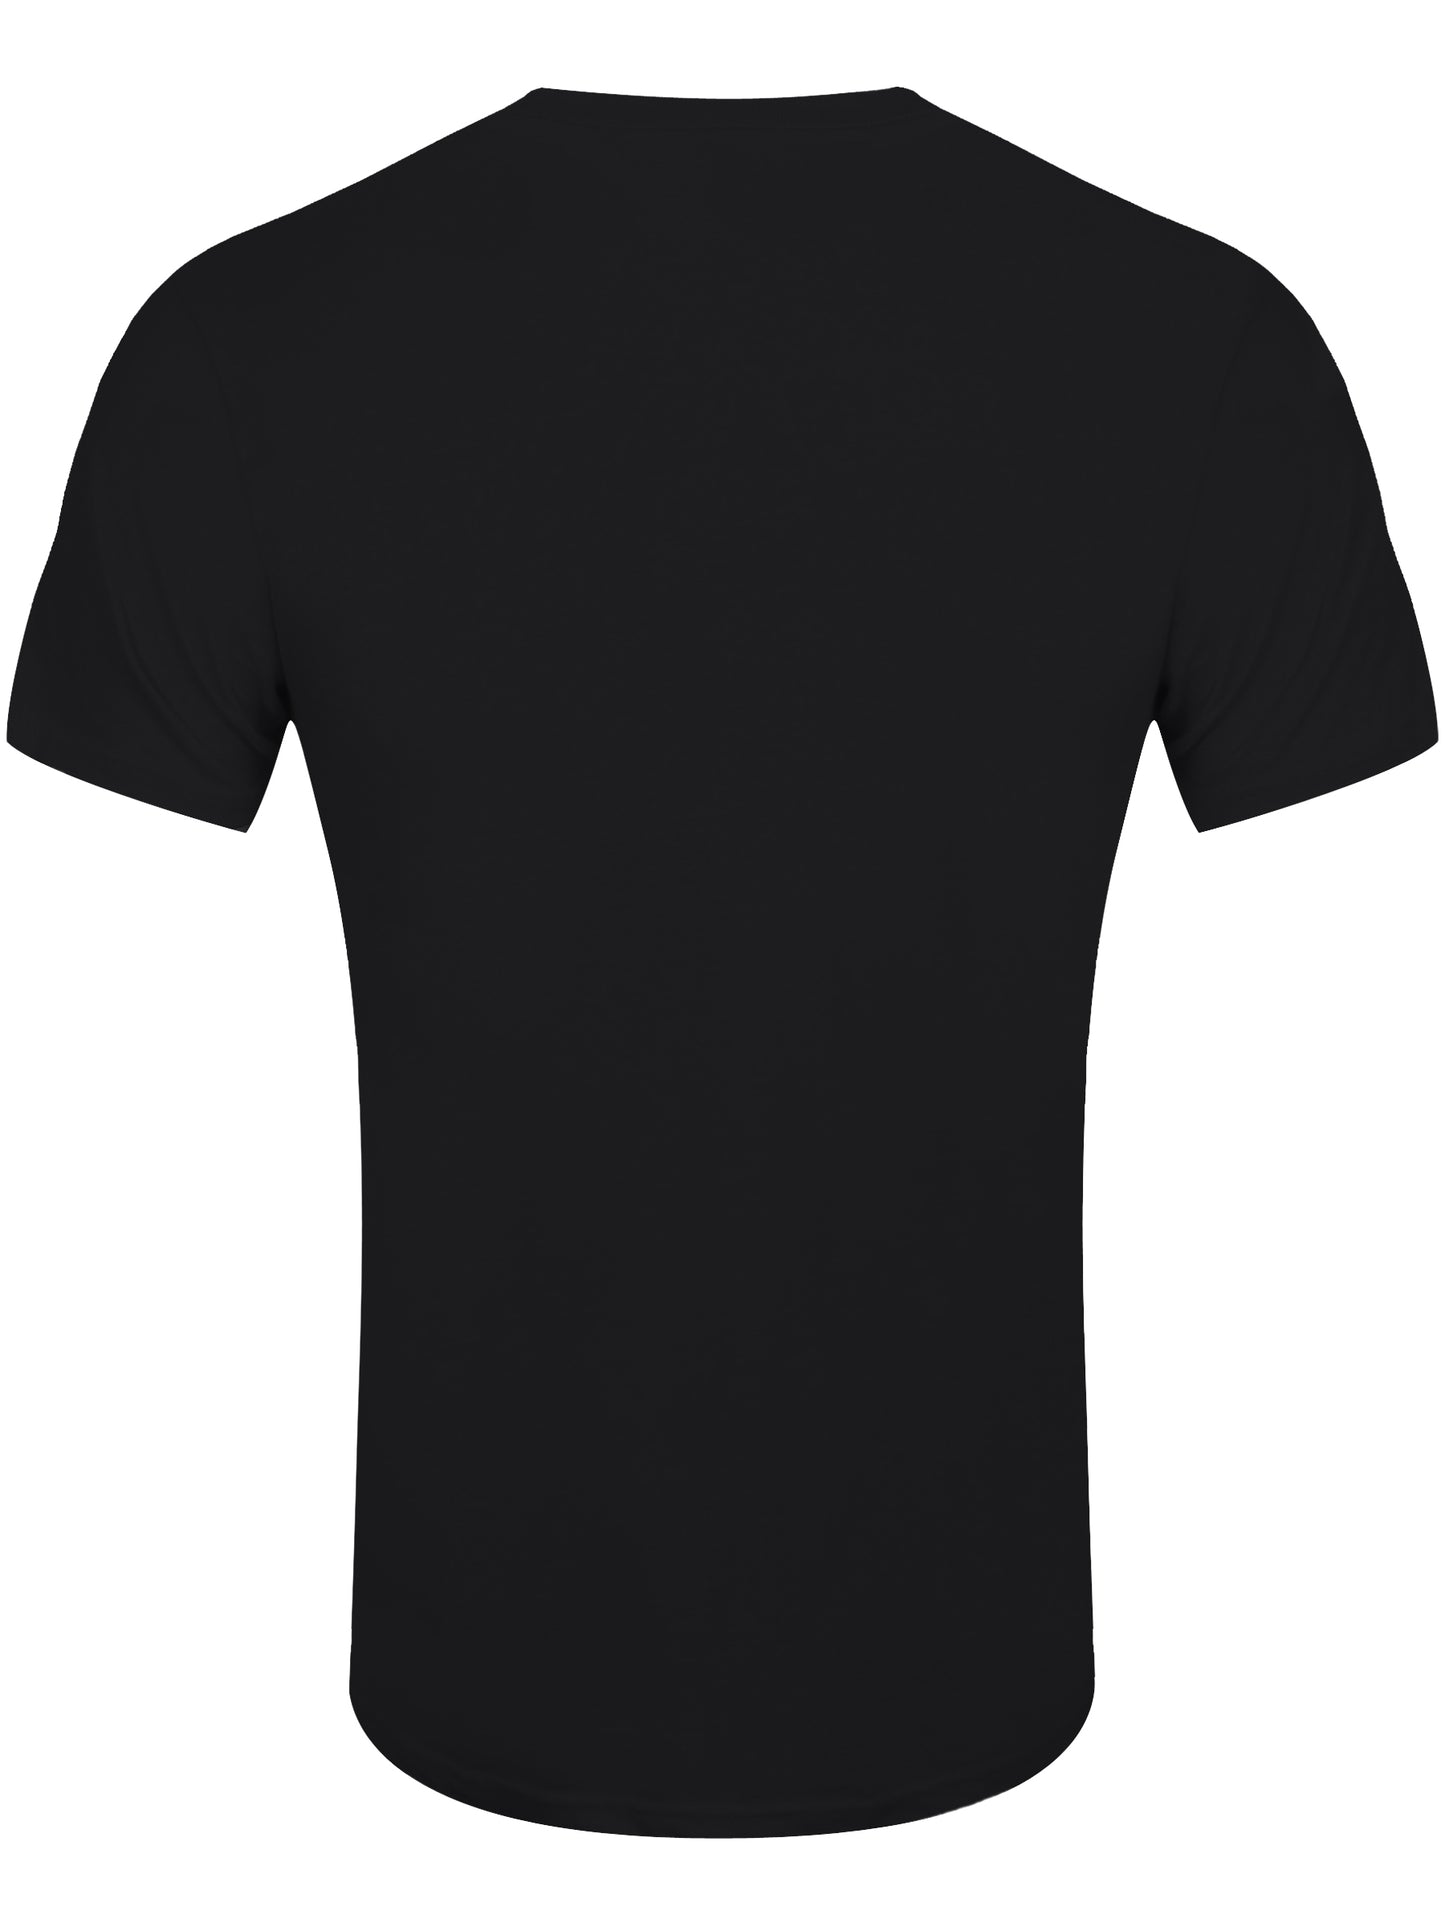 Guns N Roses Paradise City Men's Black T-Shirt